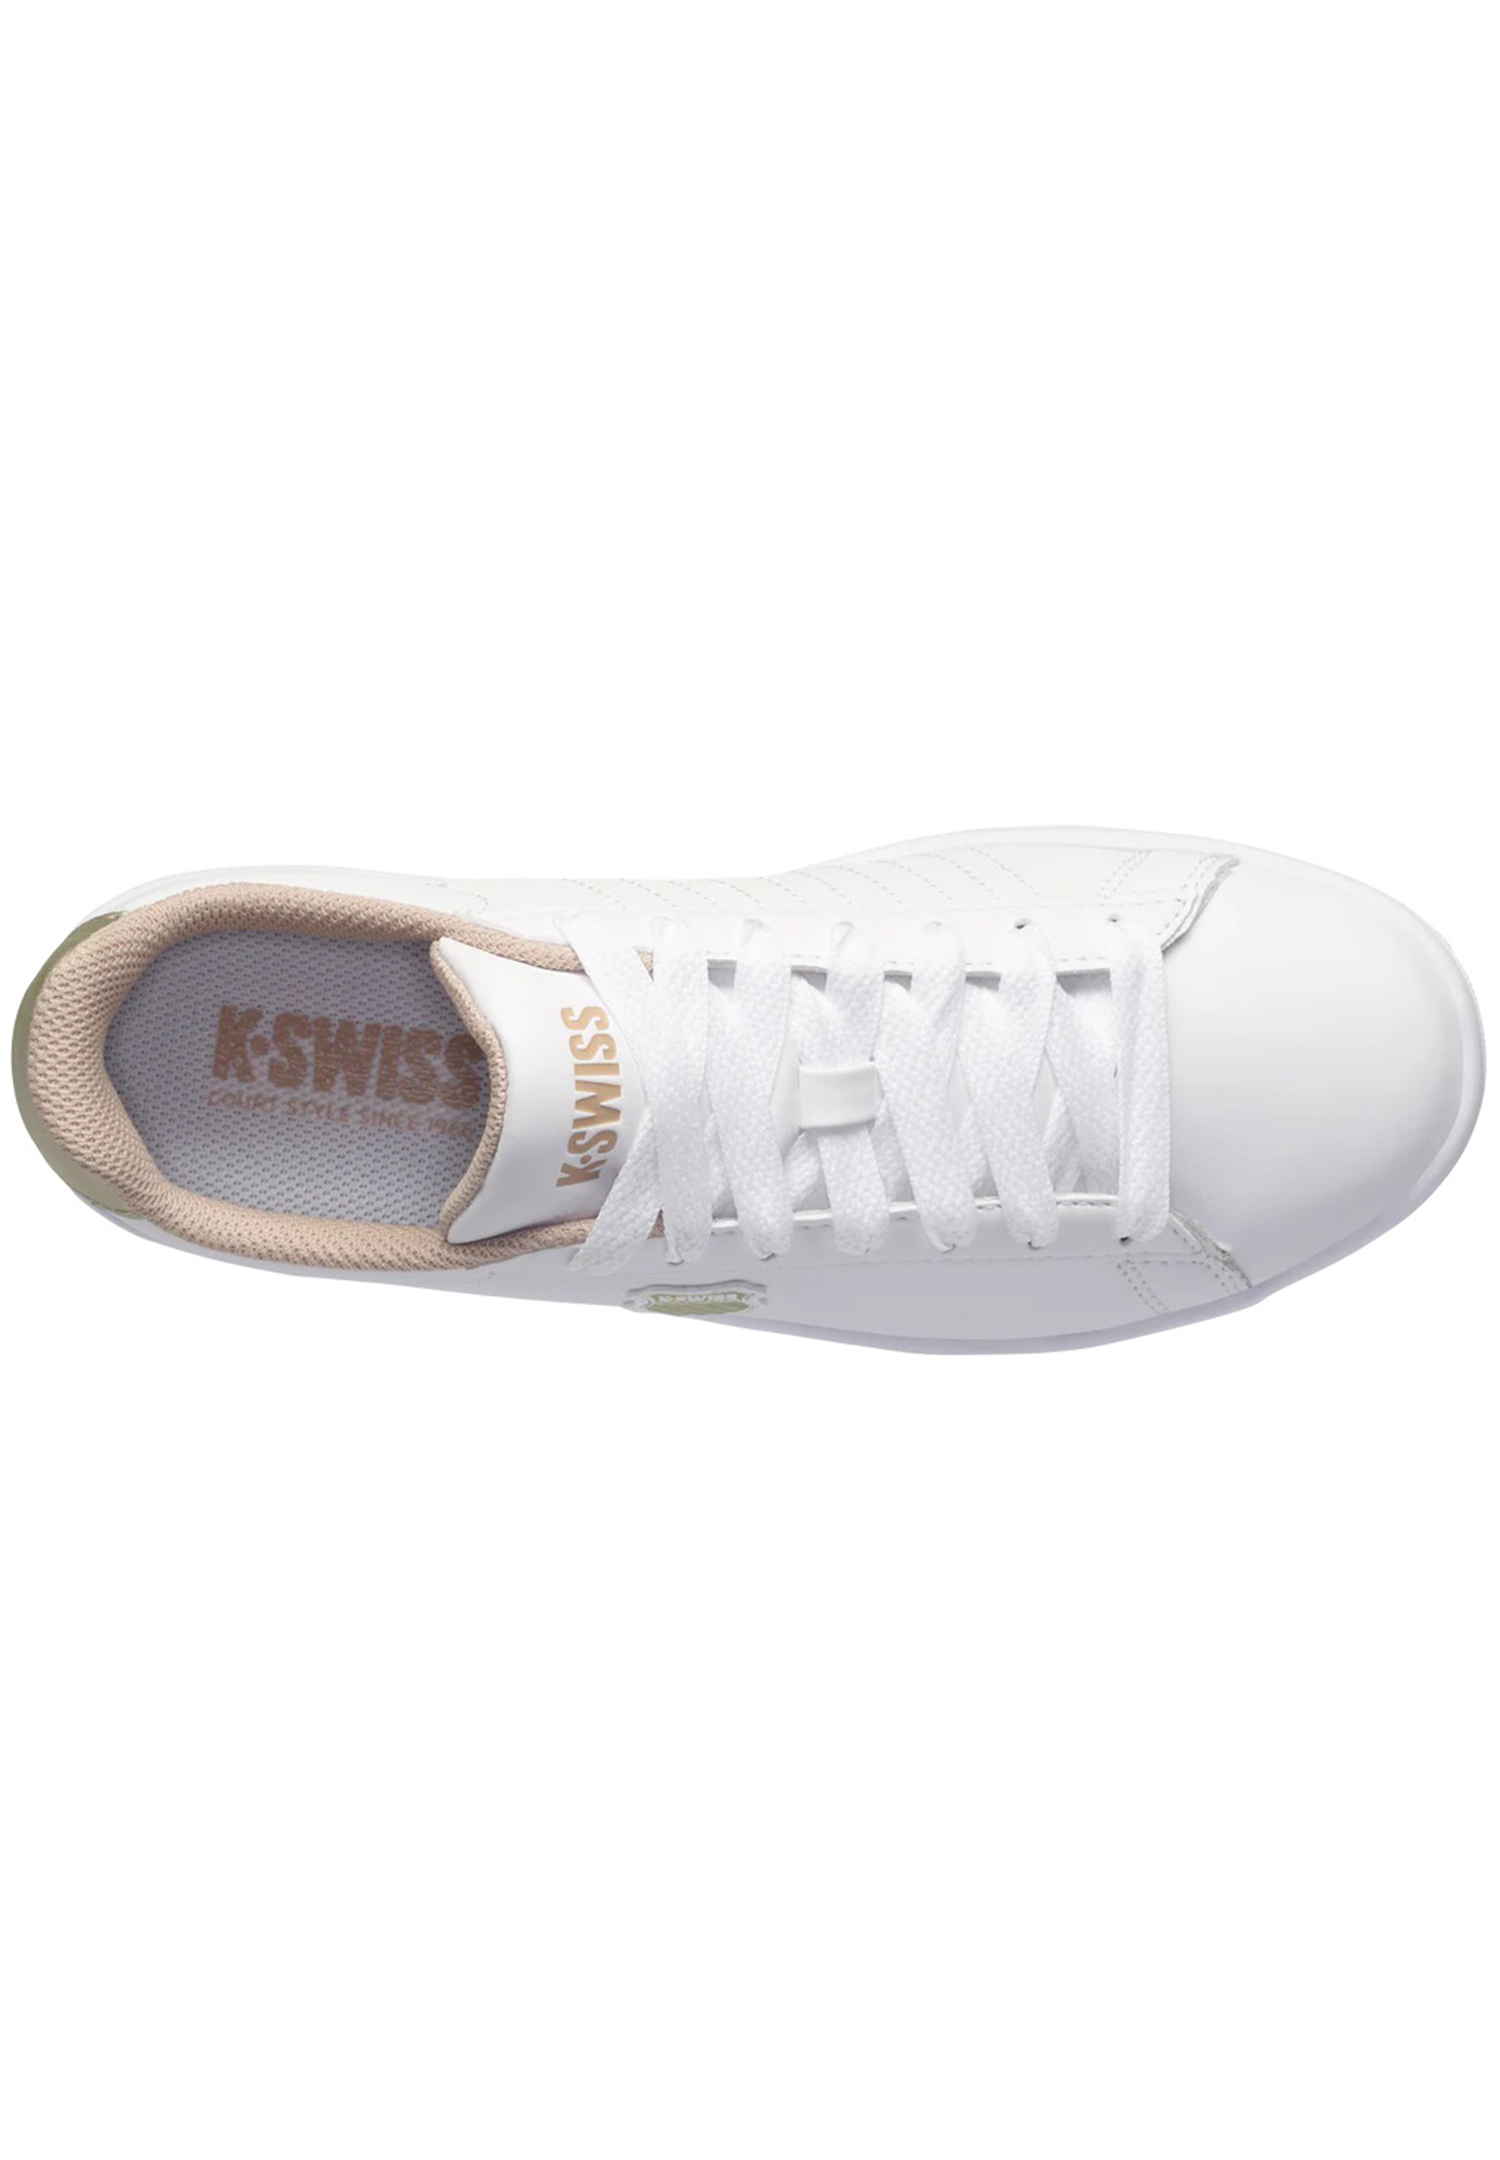 K-SWISS Court Shield Damen Sneaker Sportschuh 96599-997-M weiss/beige